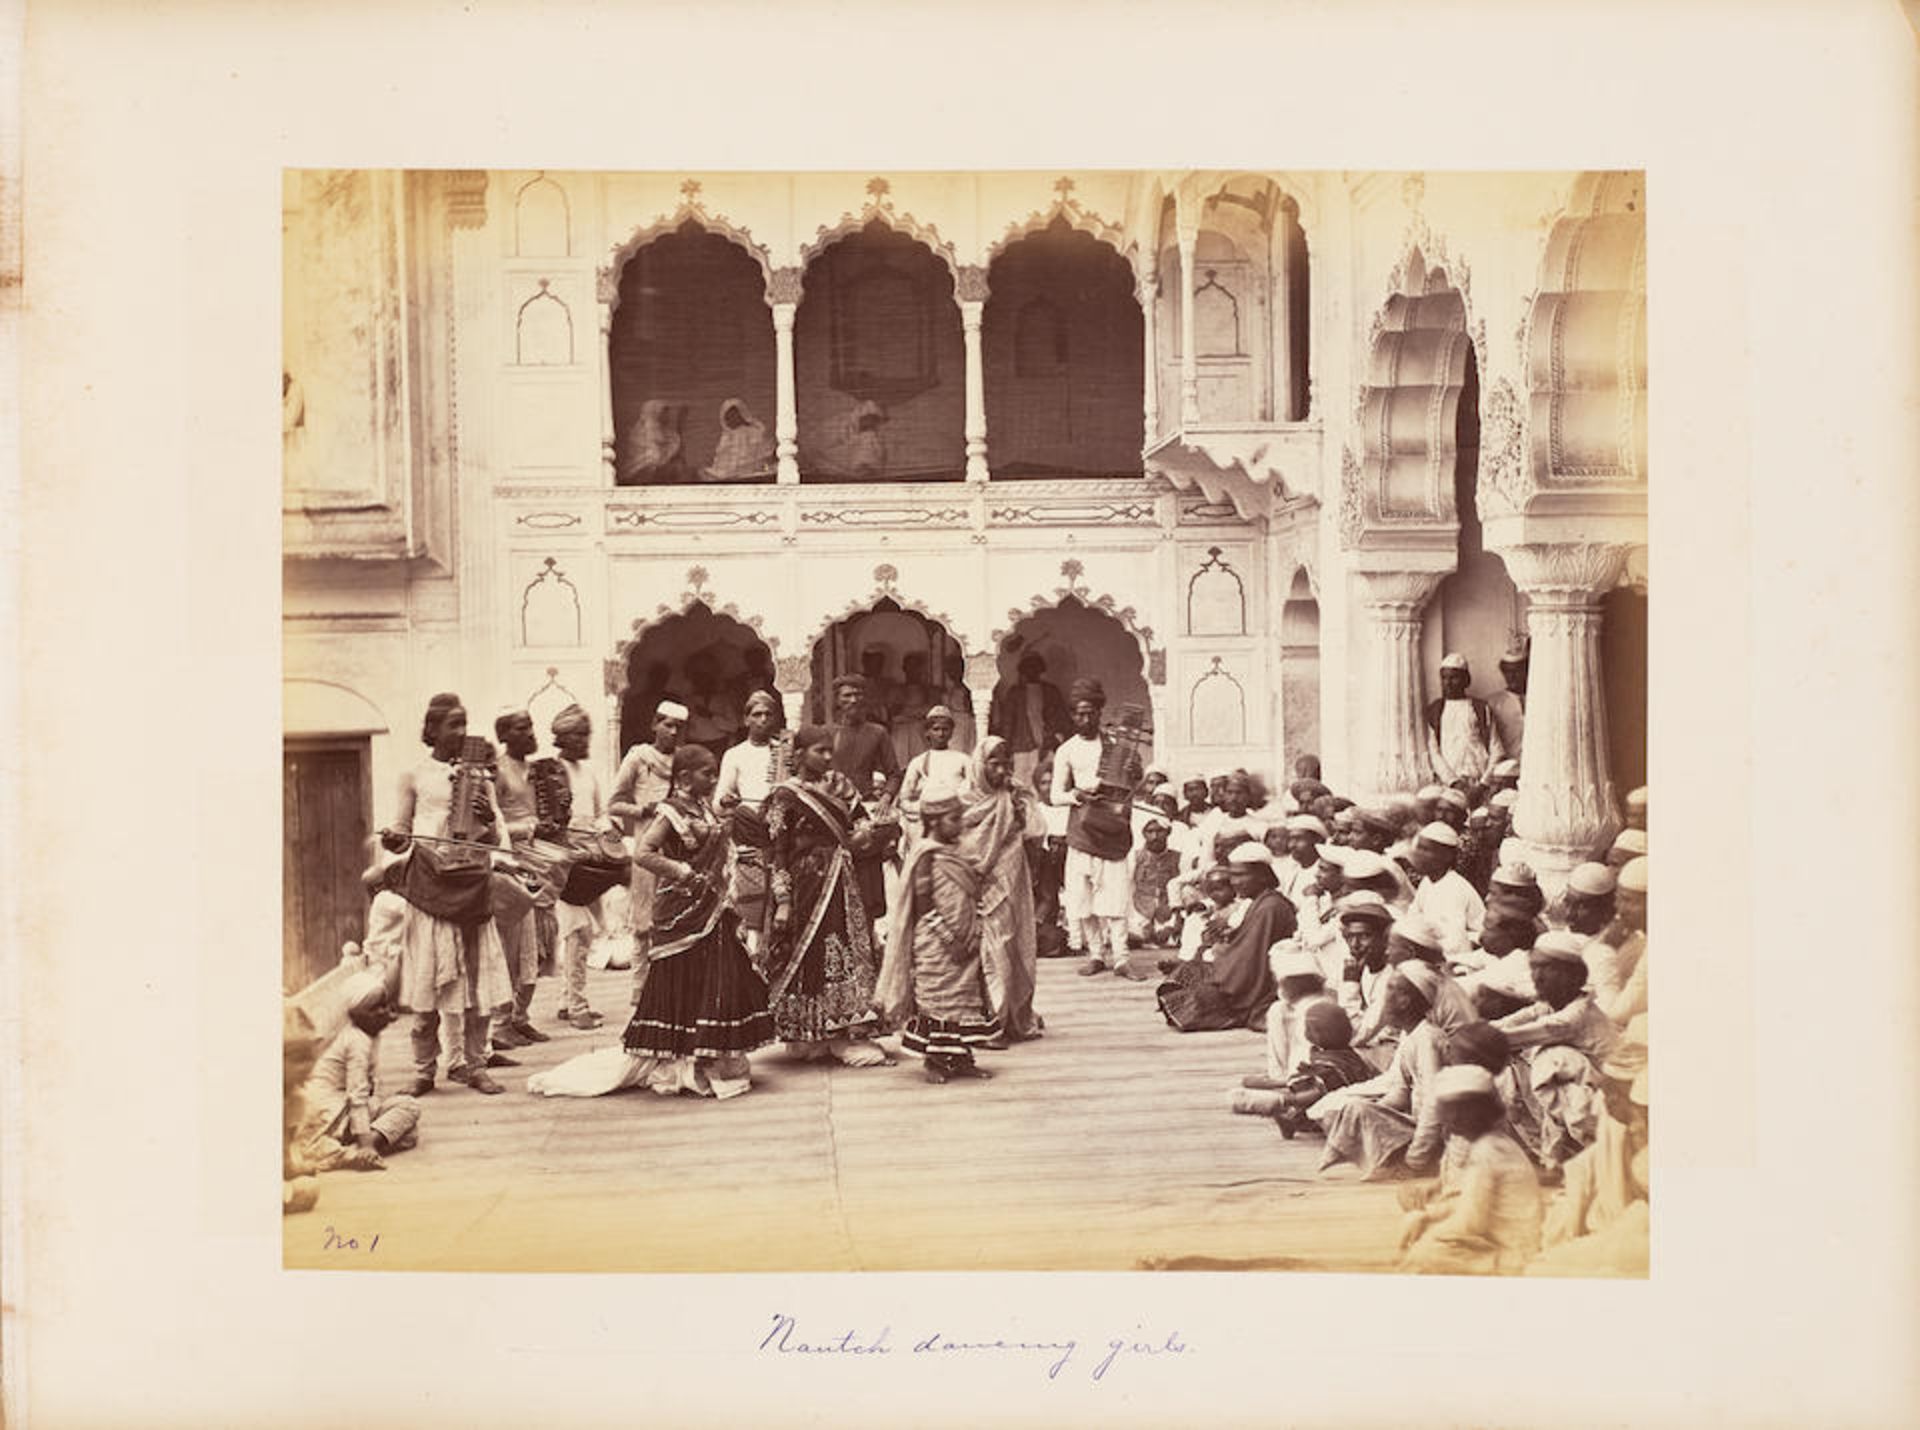 BOURNE PHOTOGRAPH ALBUM OF INDIA. BOURNE, SAMUEL. 1834-1912. 85 photographs of India and environ...